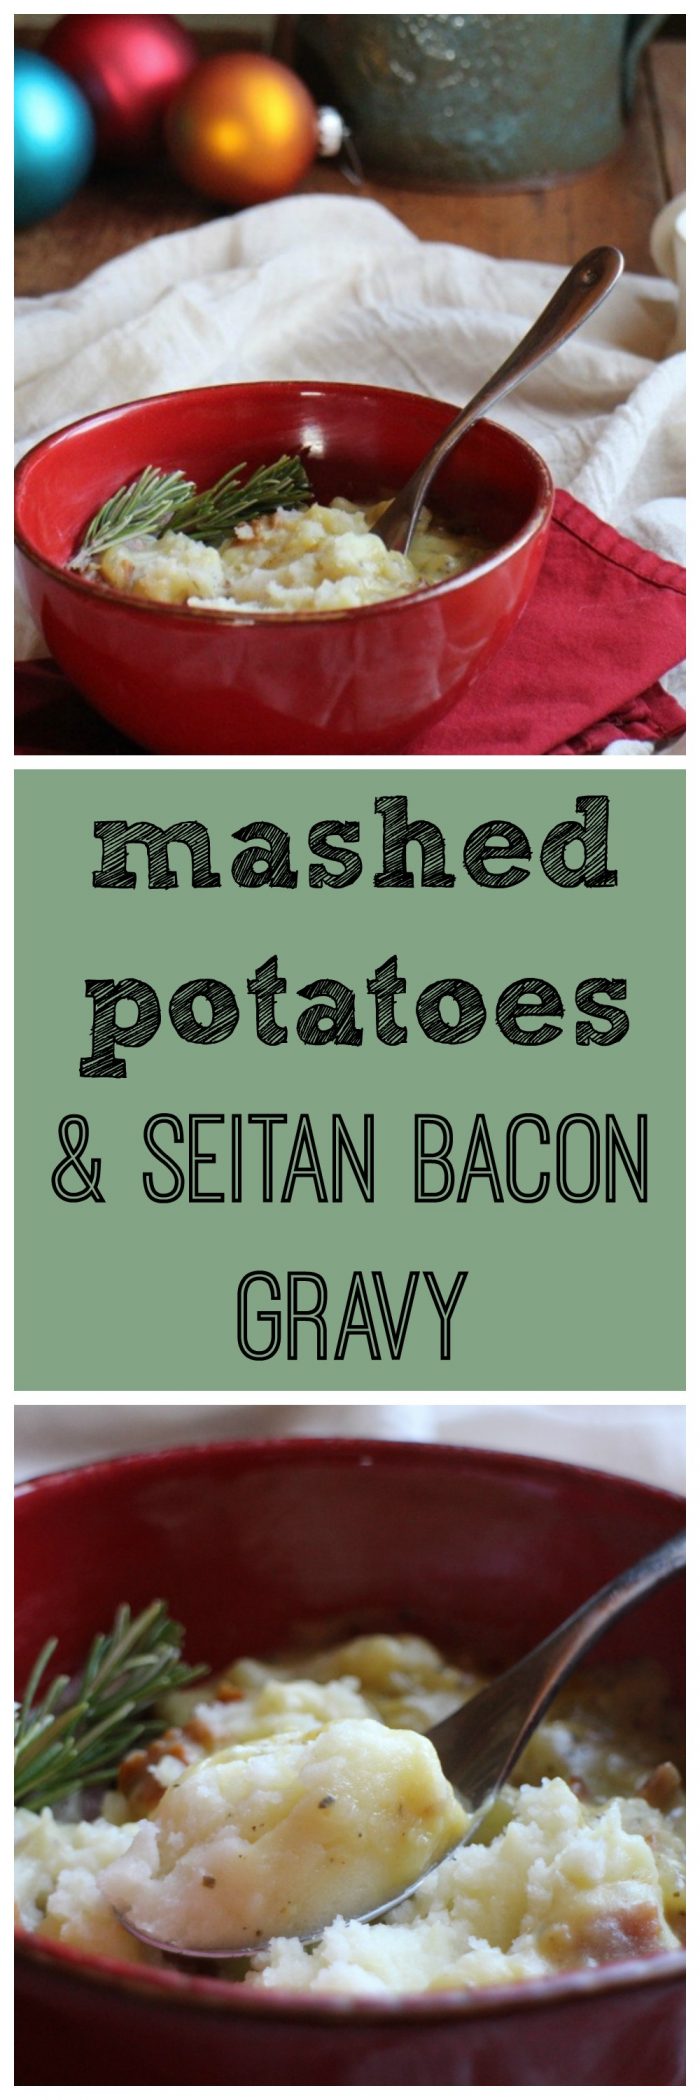 A Christmas Carol dinner: Mashed potatoes & seitan bacon gravy. Vegan. | cadryskitchen.com